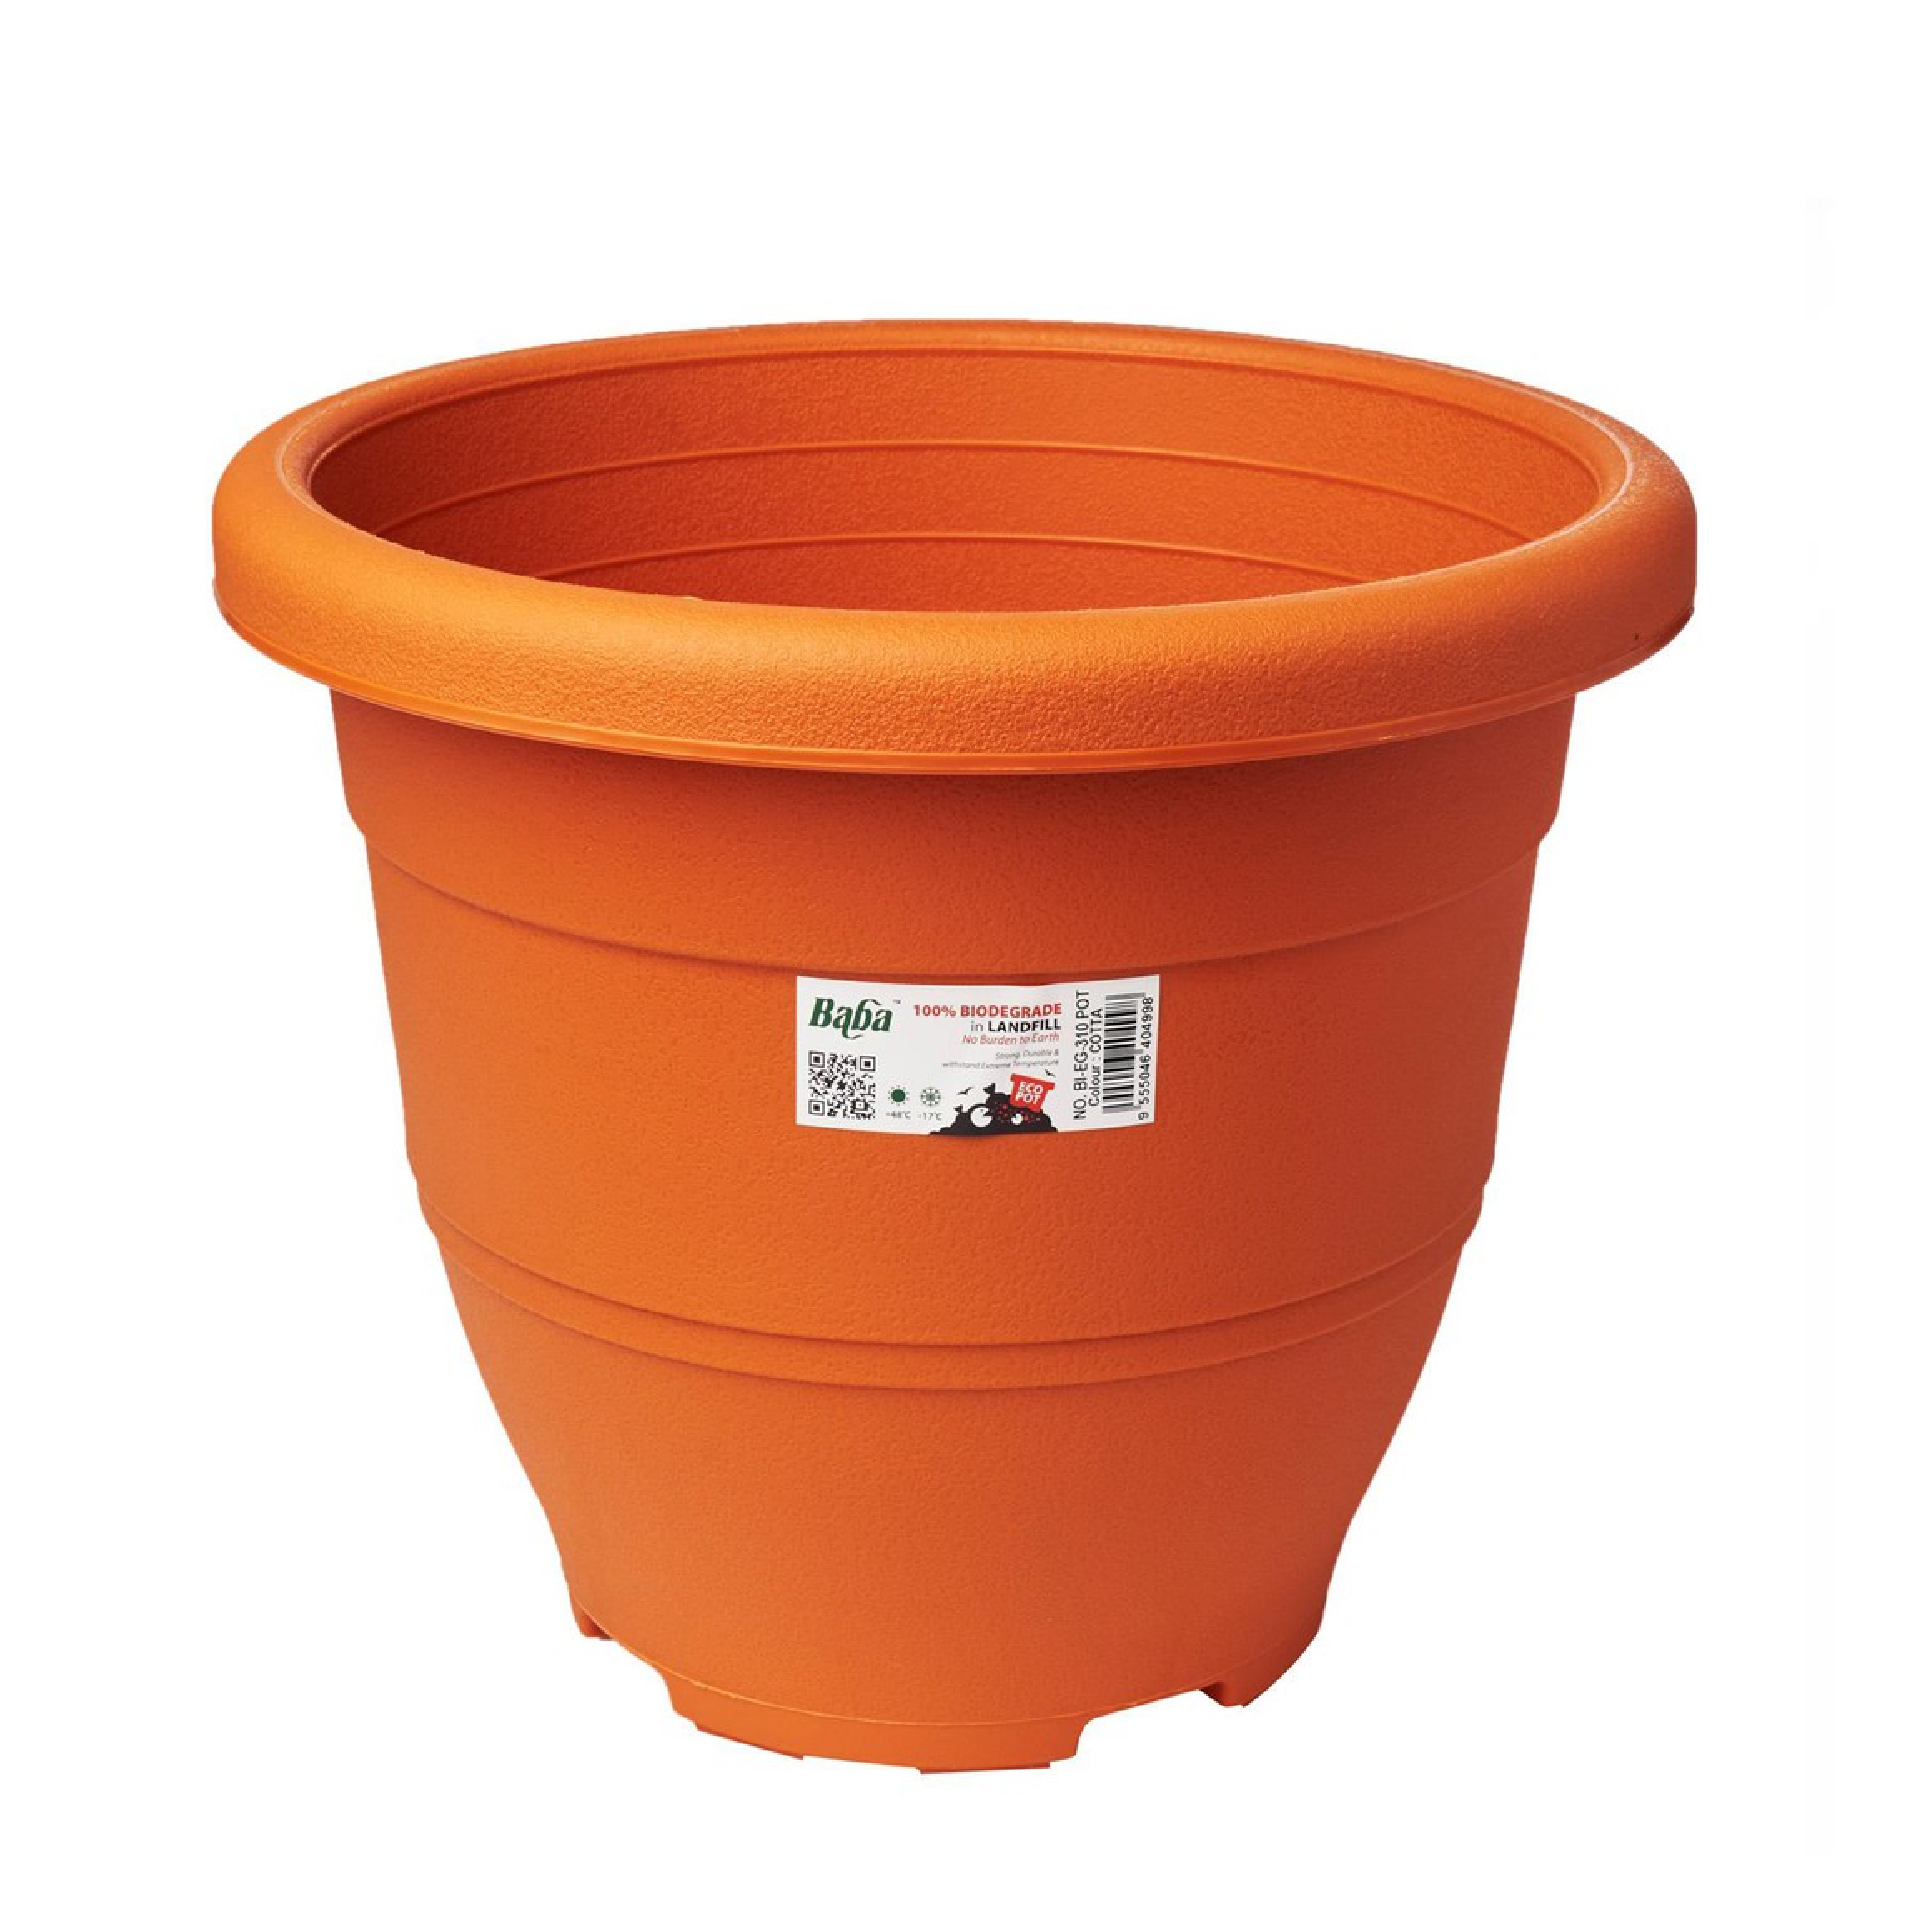 Baba 31CM BIO-DEGRADABLE Plastic Pot EG-310 COTTA